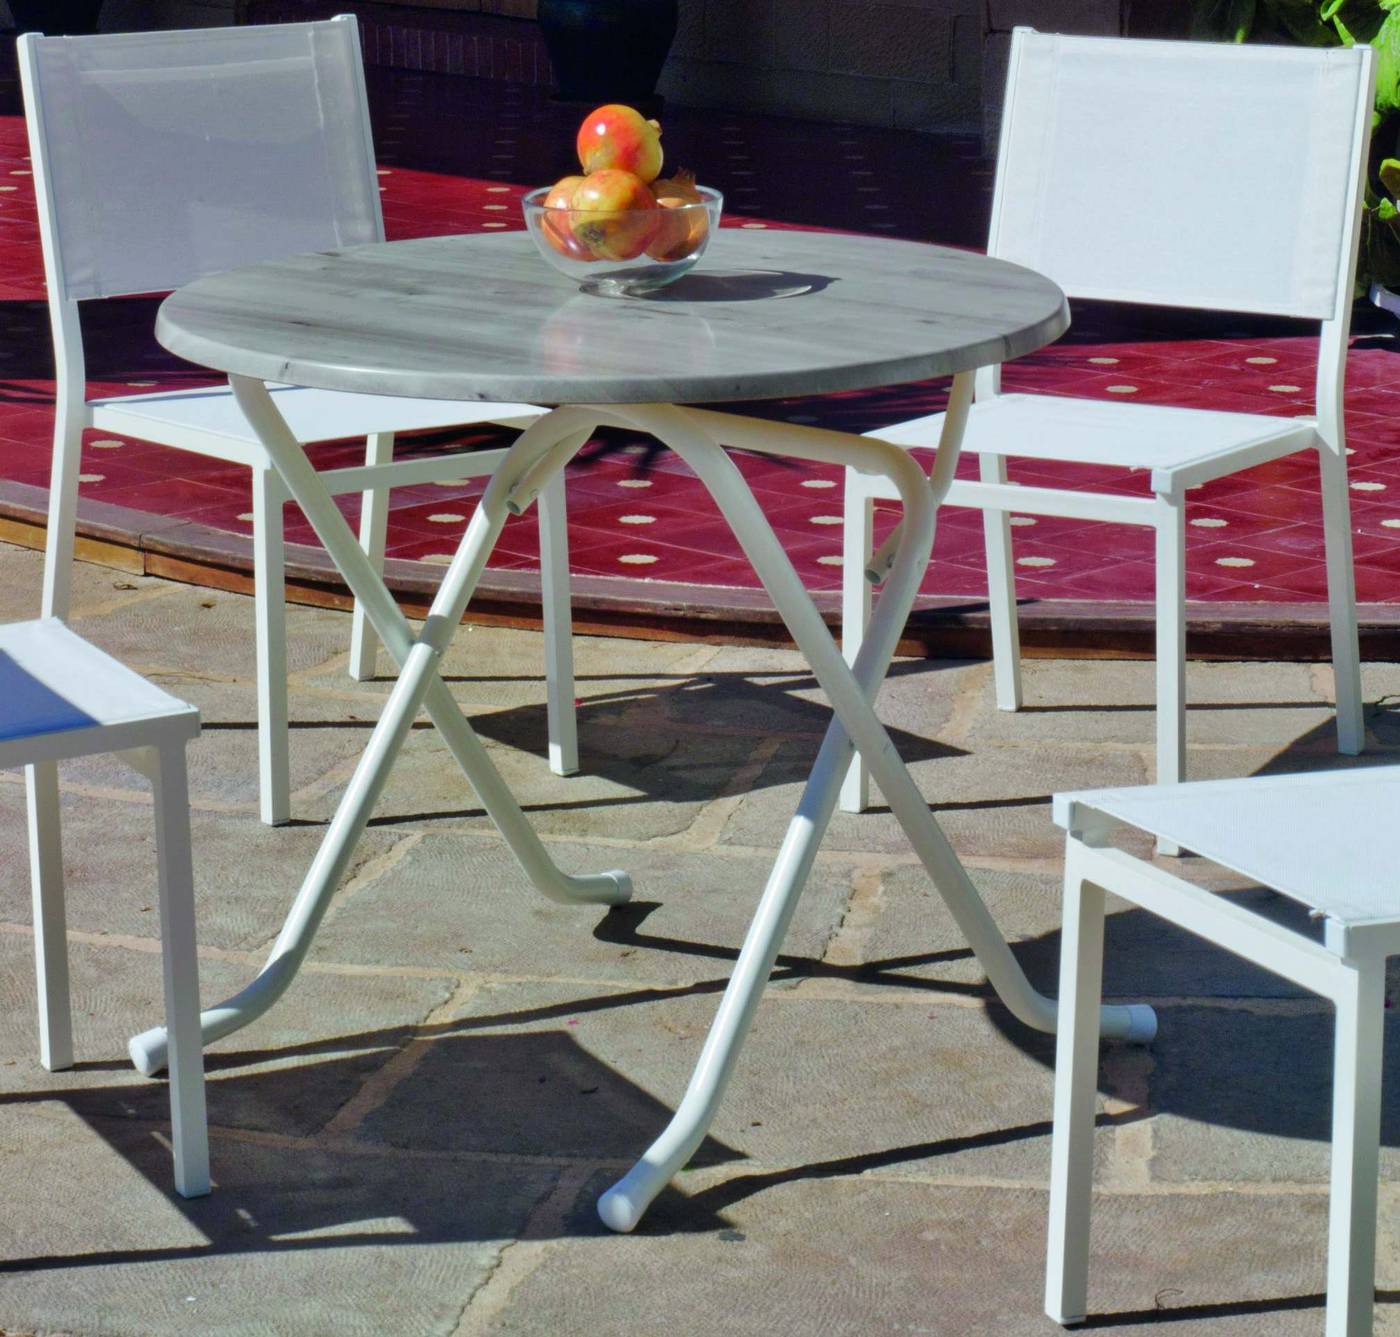 Mesa Arian-Heverzaplus 90 - Mesa redonda plegable de 90 cm., estructura de aluminio color blanco y tablero heverzaplus gris imitación mármol